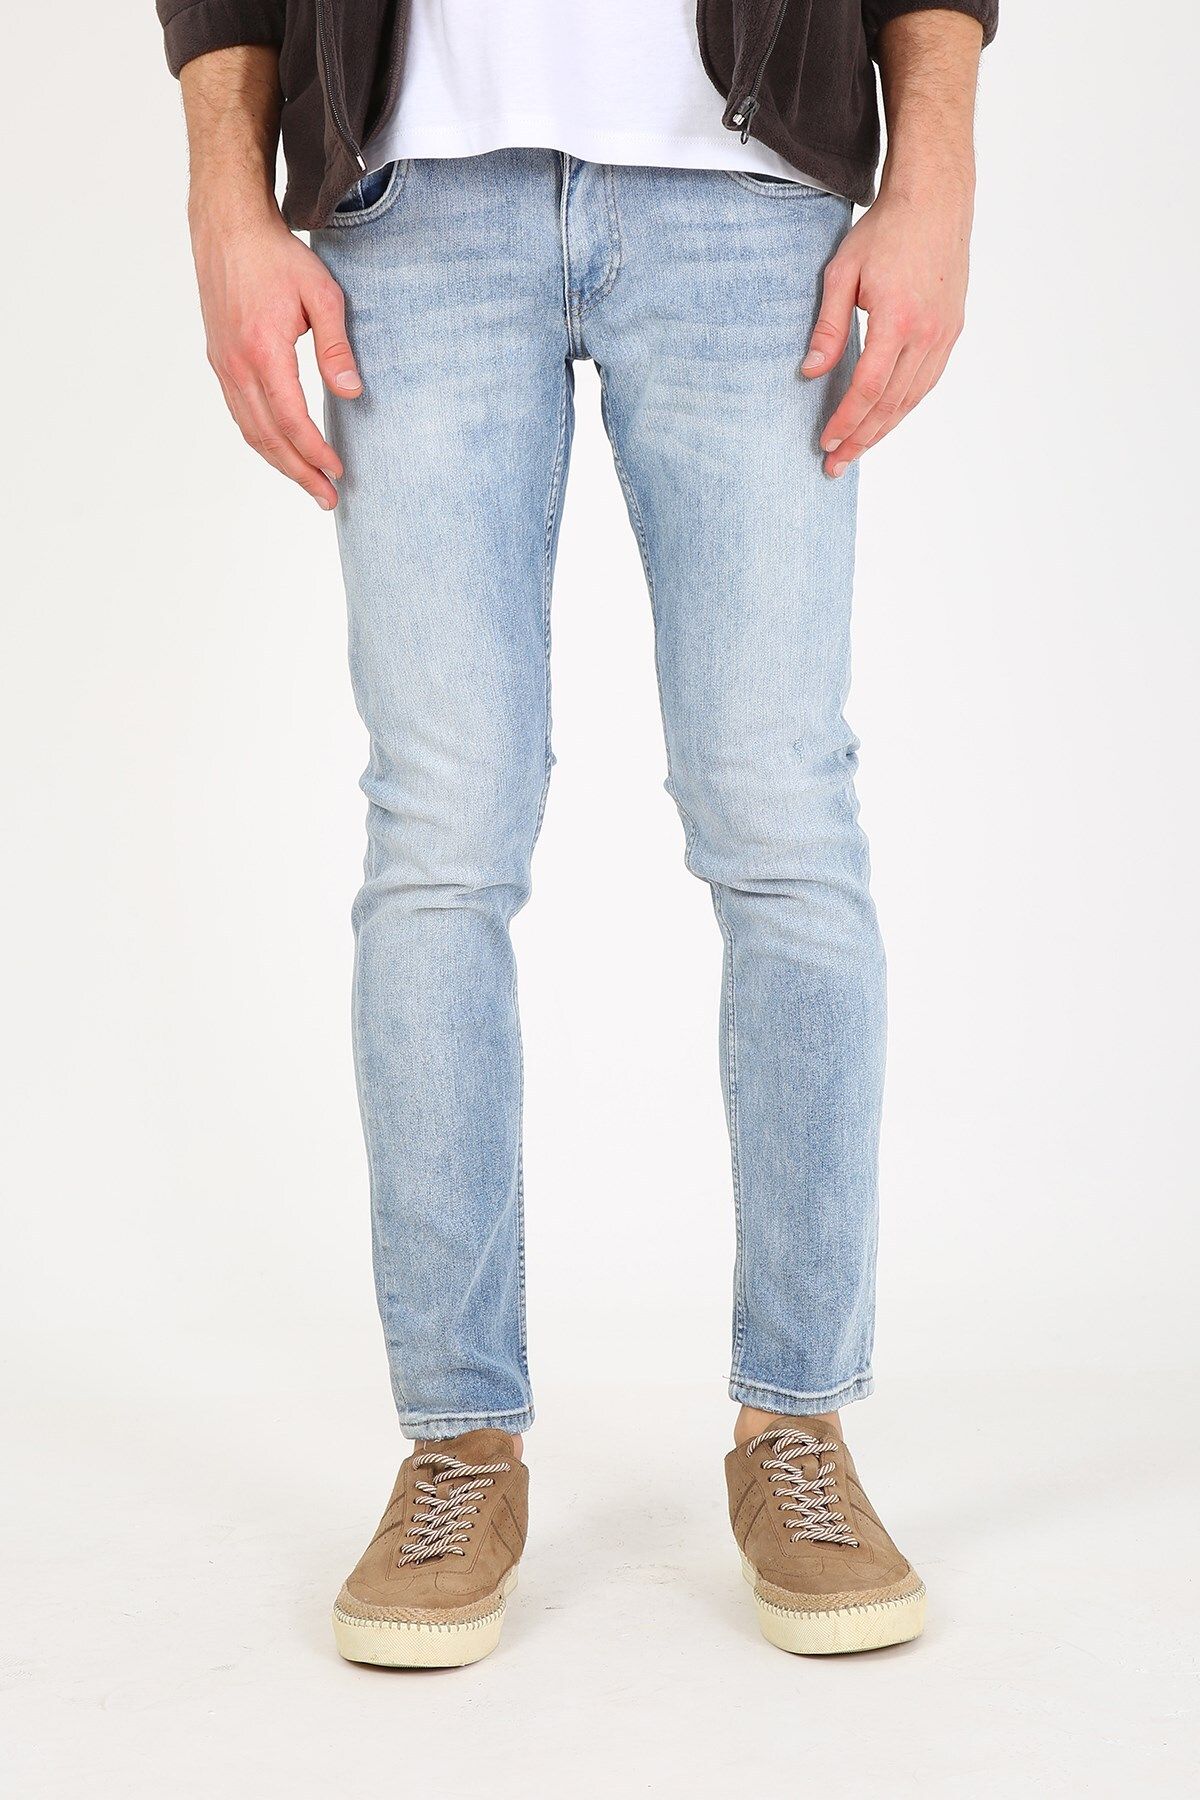 Twister Jeans Erkek Pantolon Panama 627-16 Light Blue